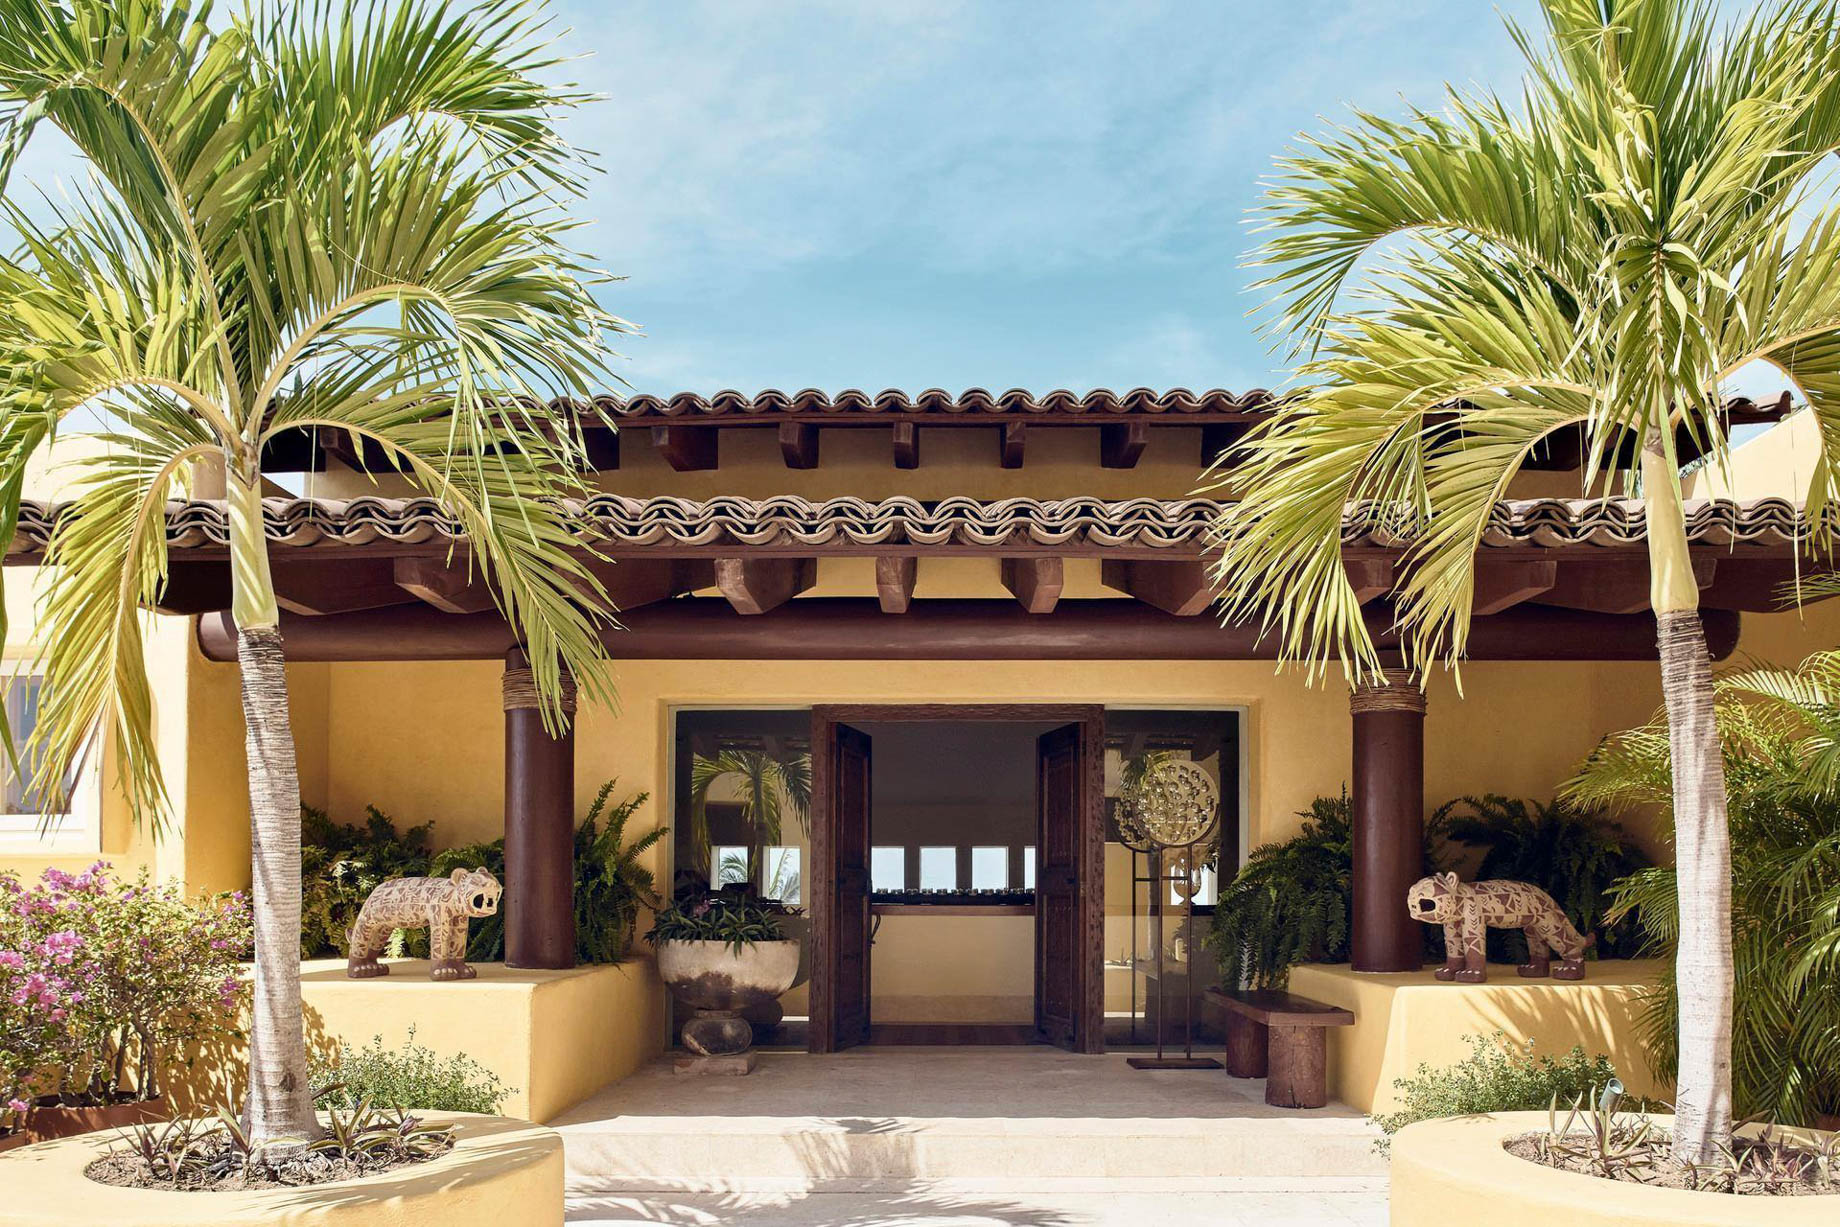 Four Seasons Resort Punta Mita – Nayarit, Mexico – Otono Ocean View Villa Entrance